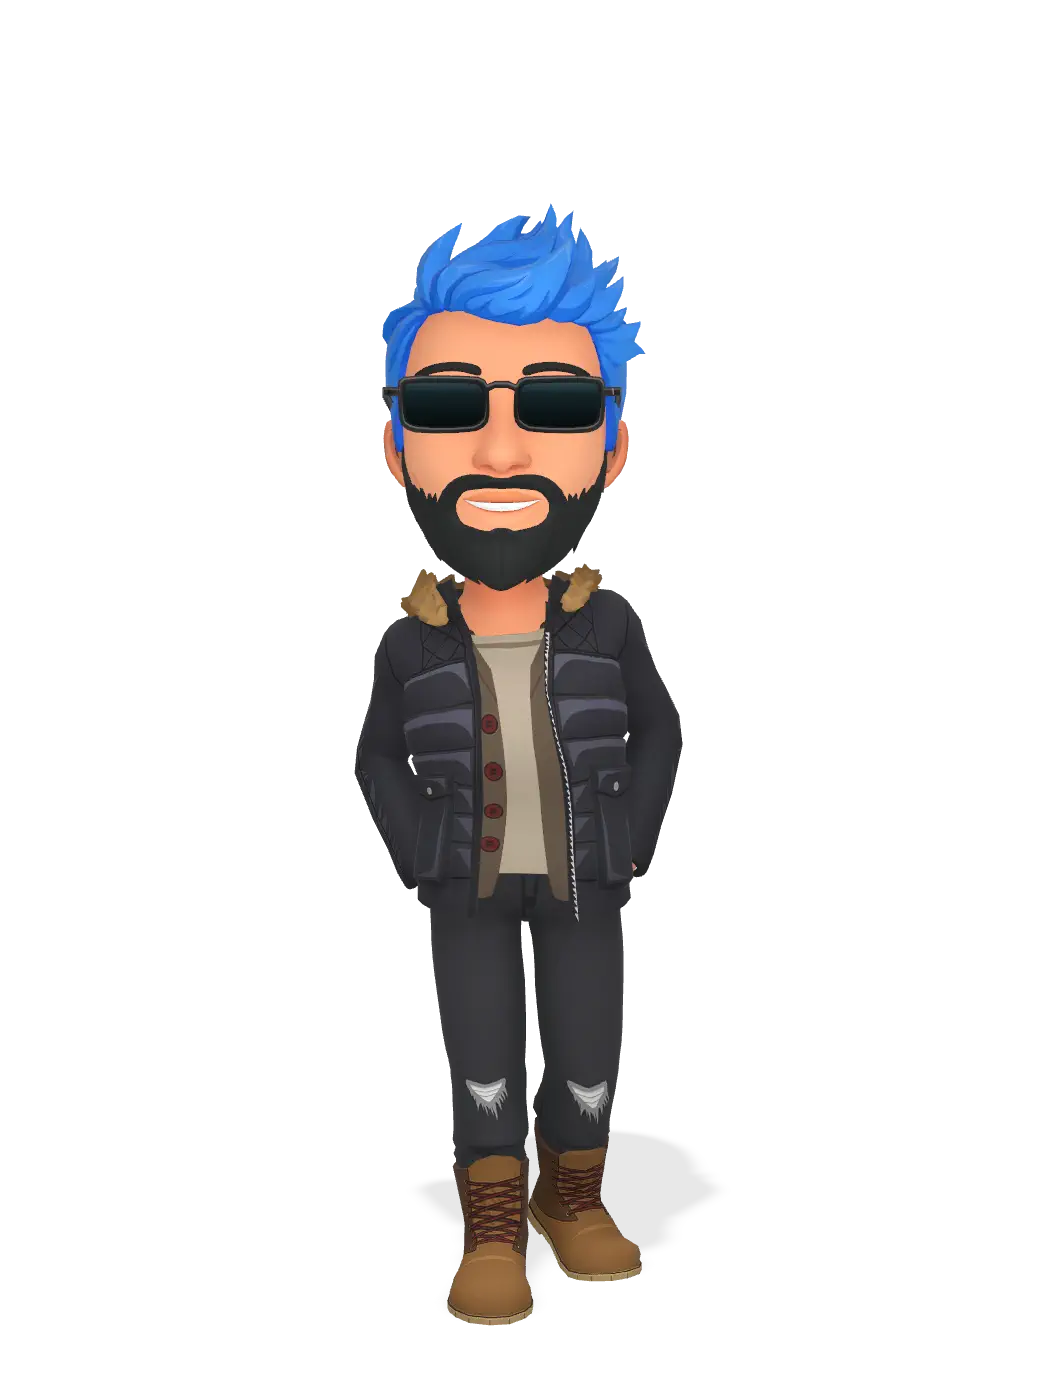 3D Bitmoji for chibrebleu avatar